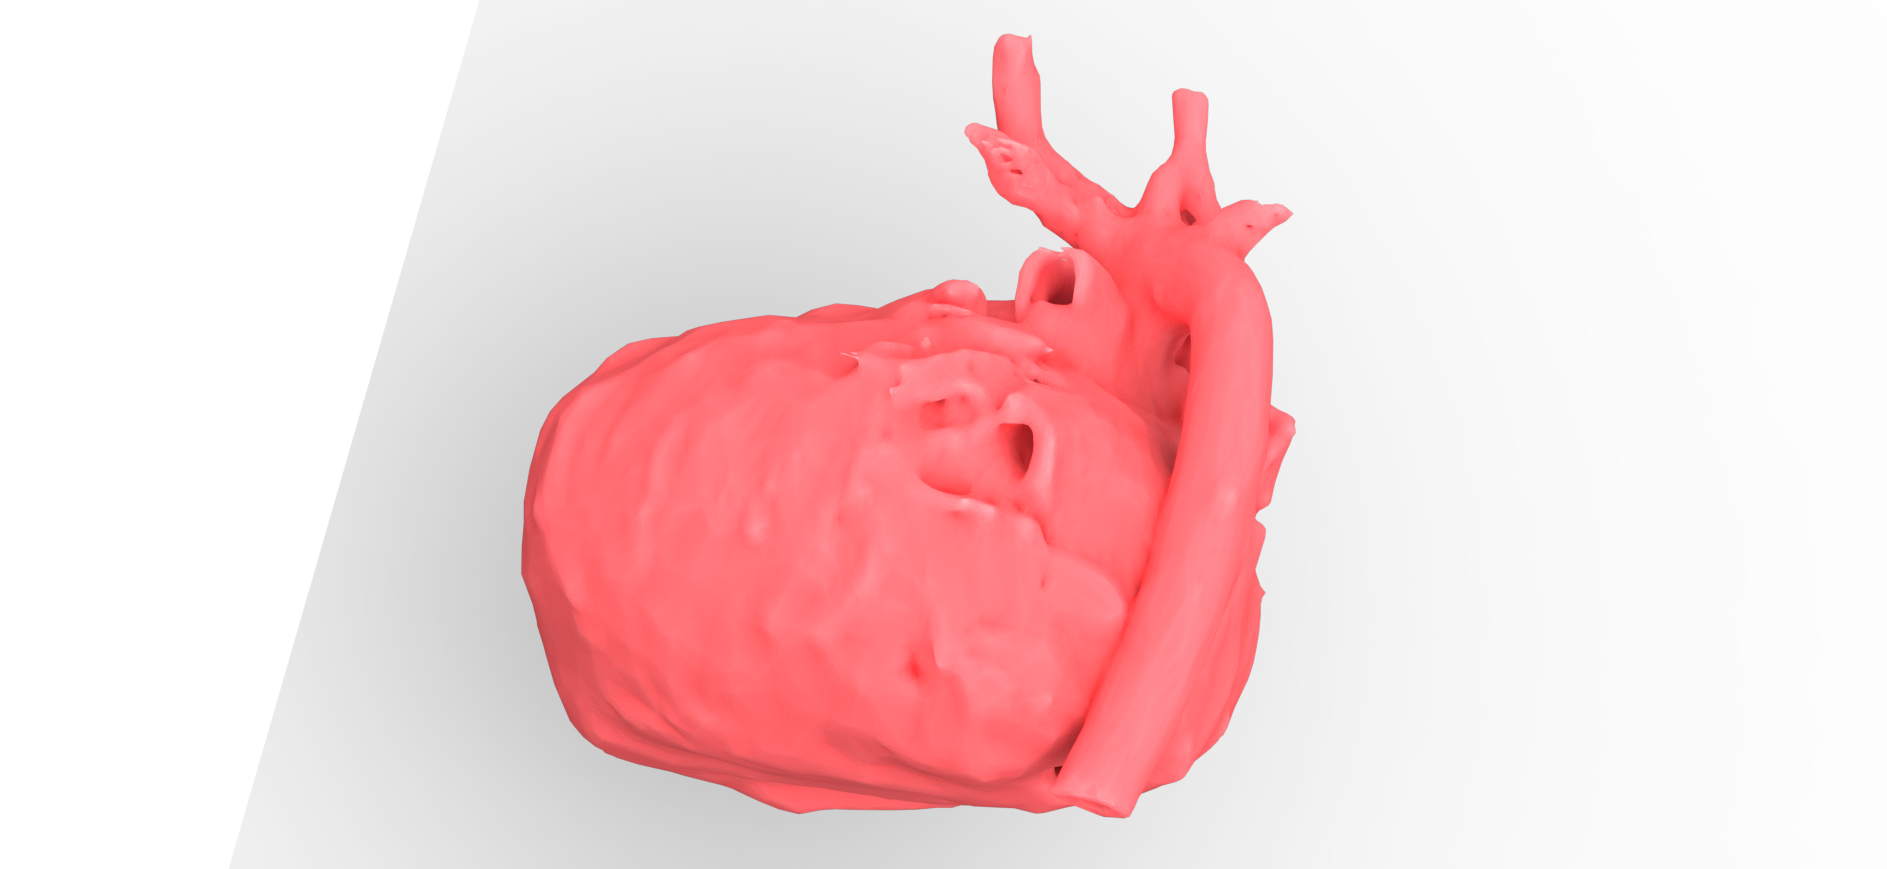 Human Heart